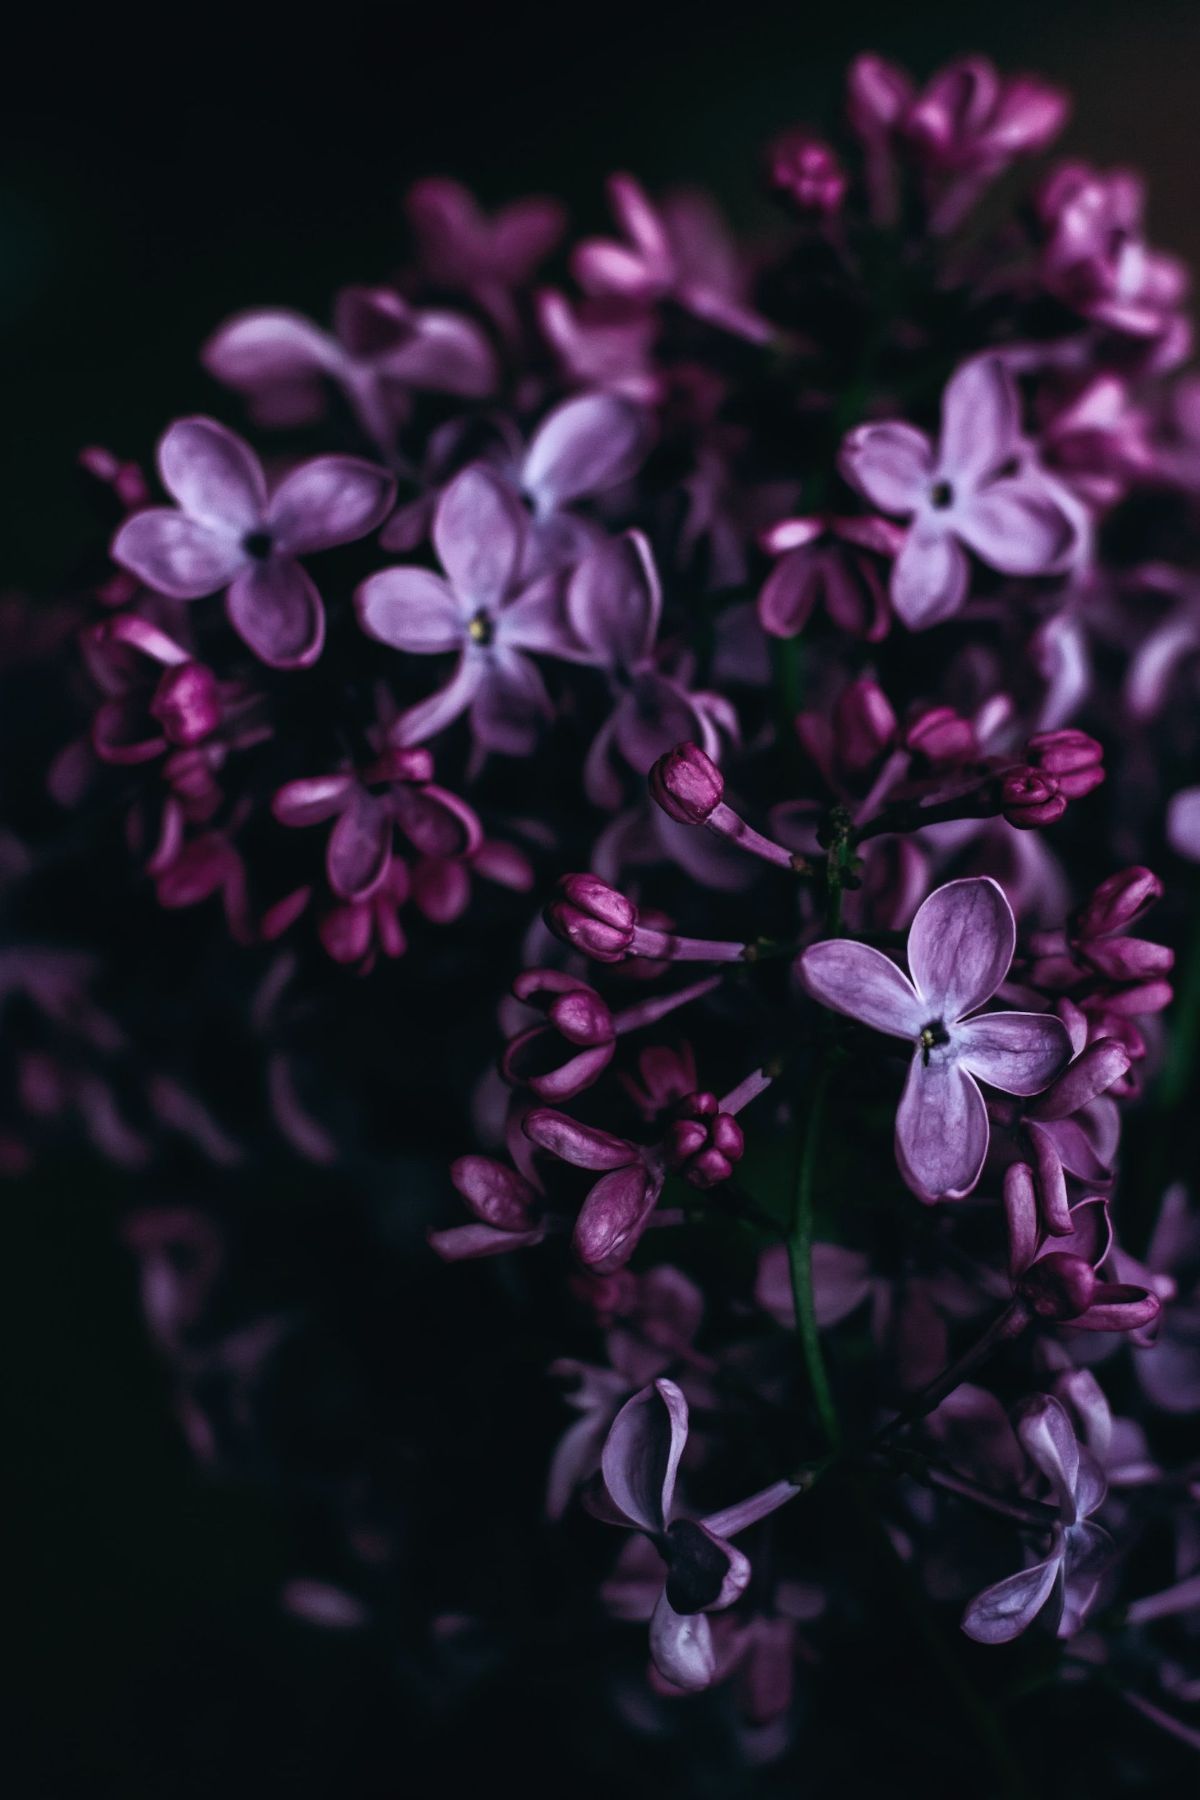 Lilacs against a black background